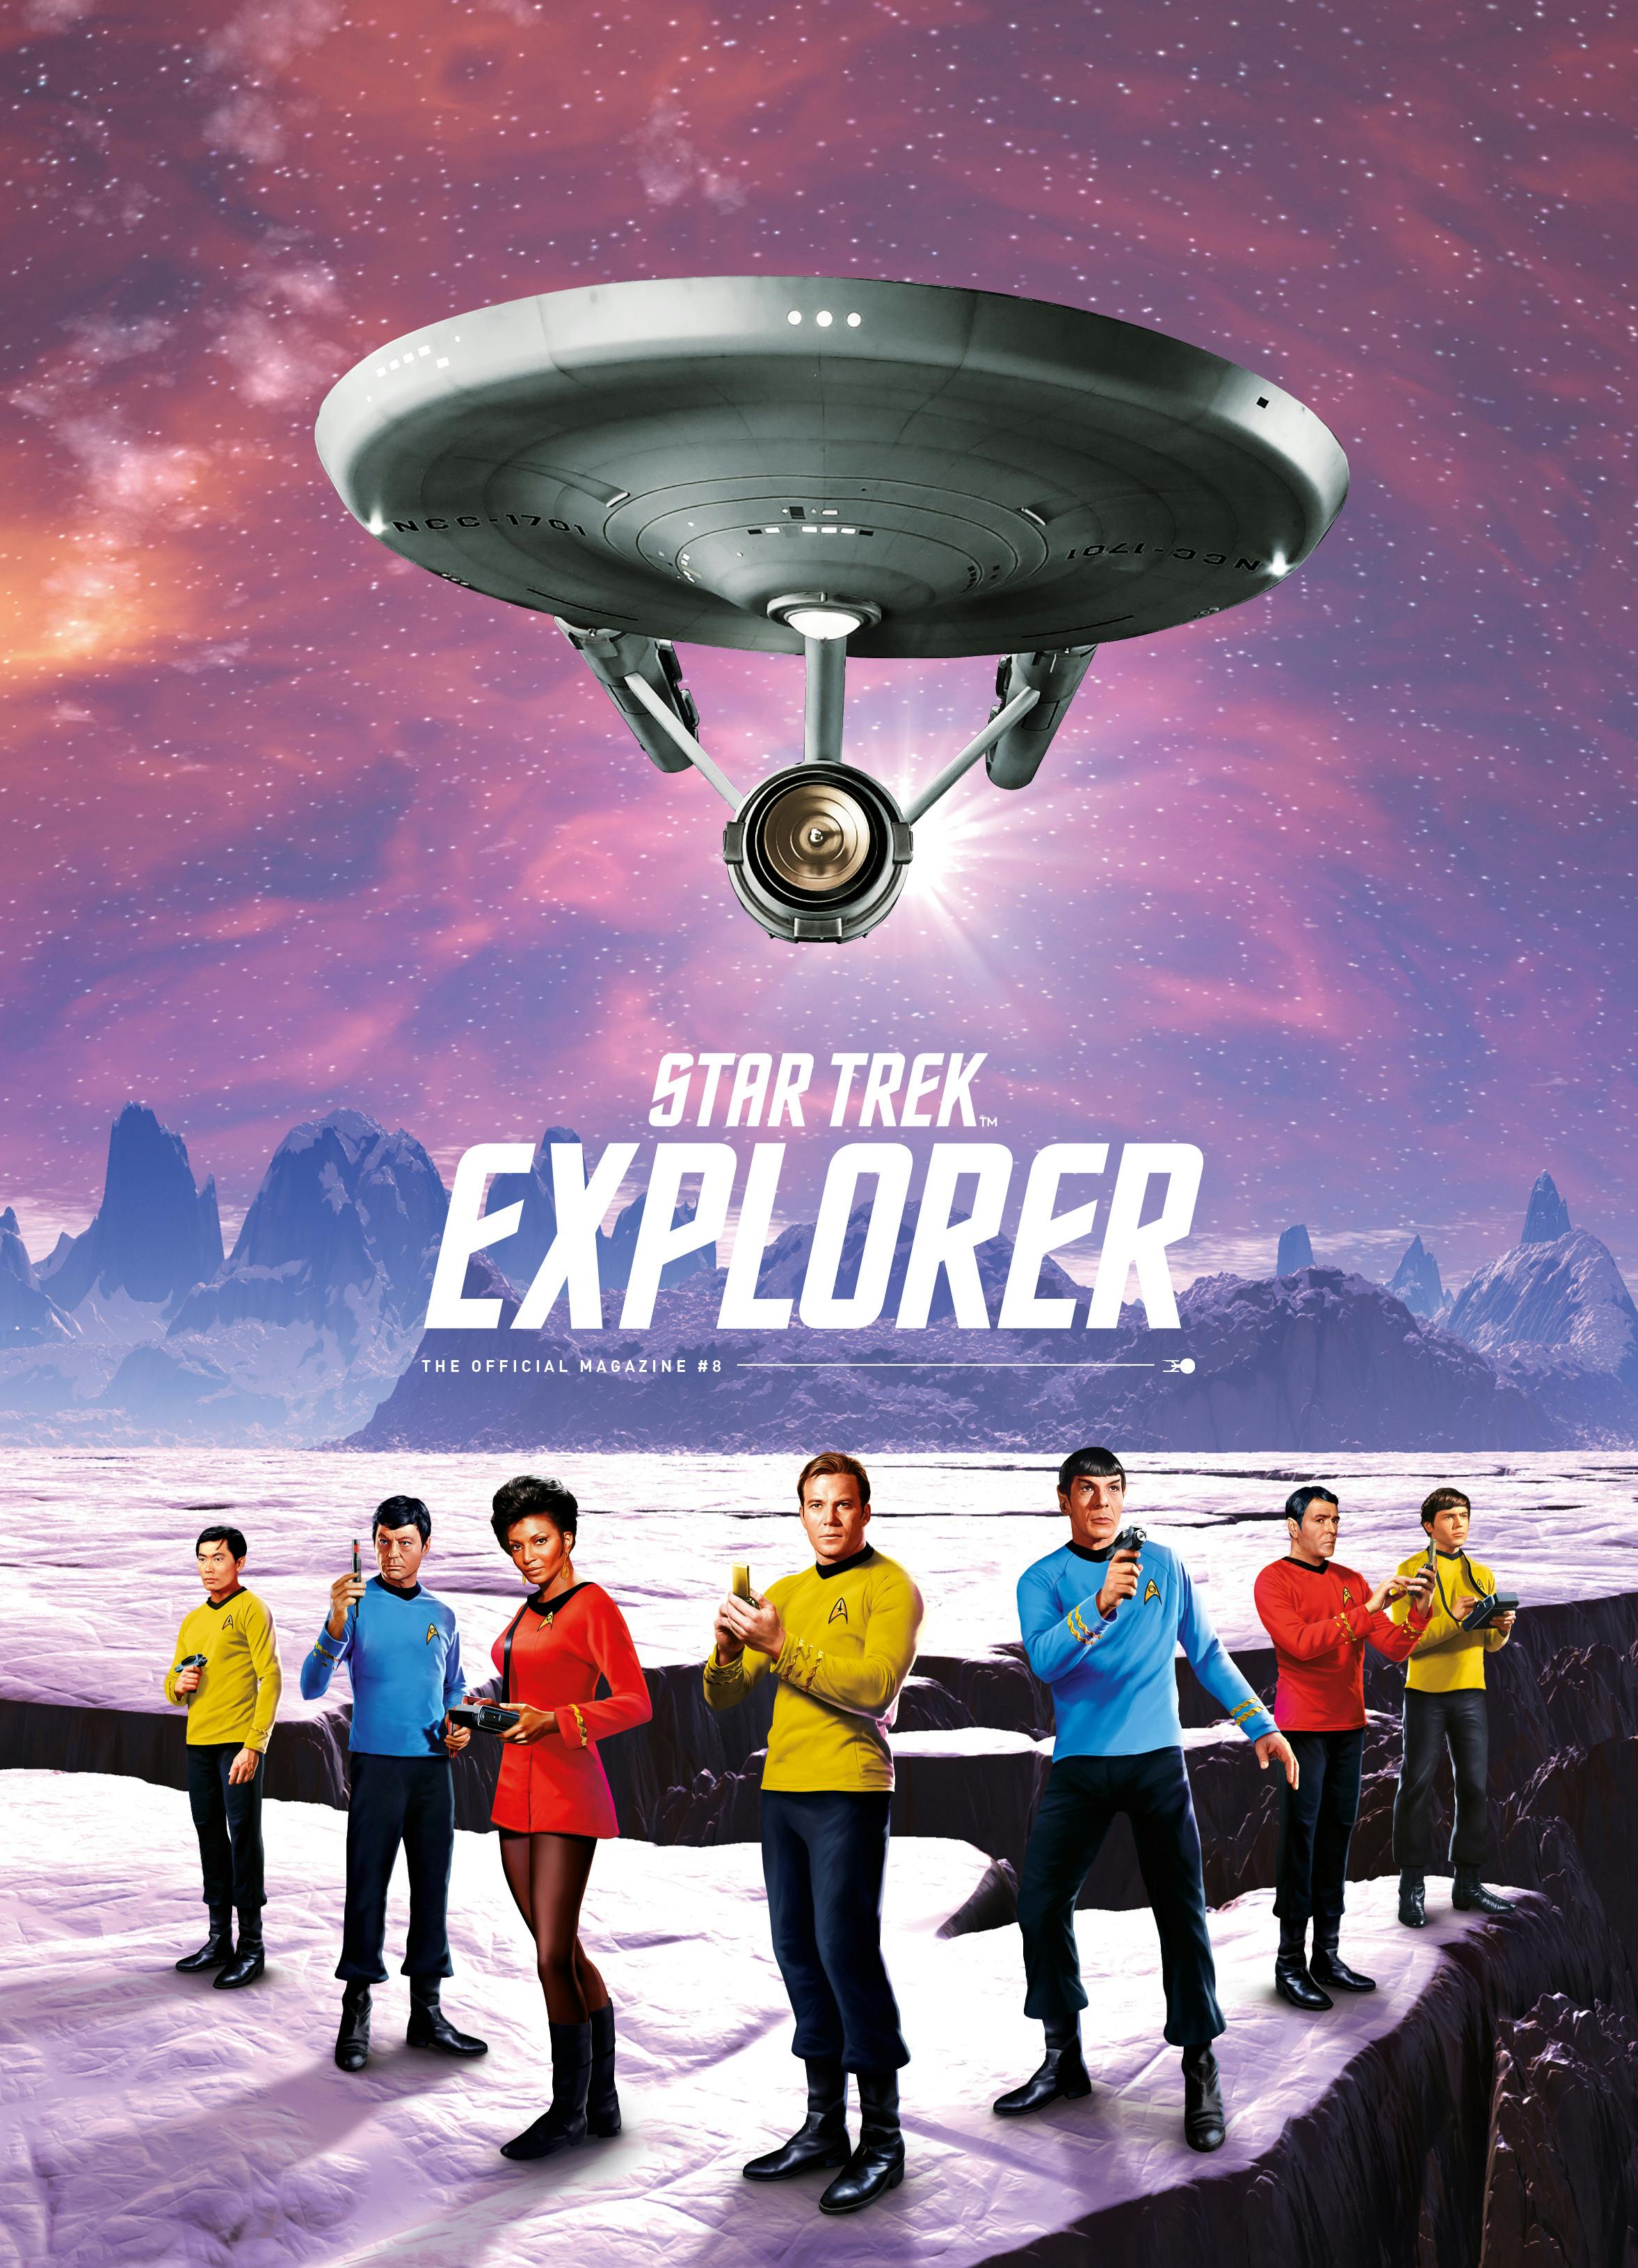 Star Trek Explorer #8 magazine foil cover featuring the crew of Star Trek: The Original Series